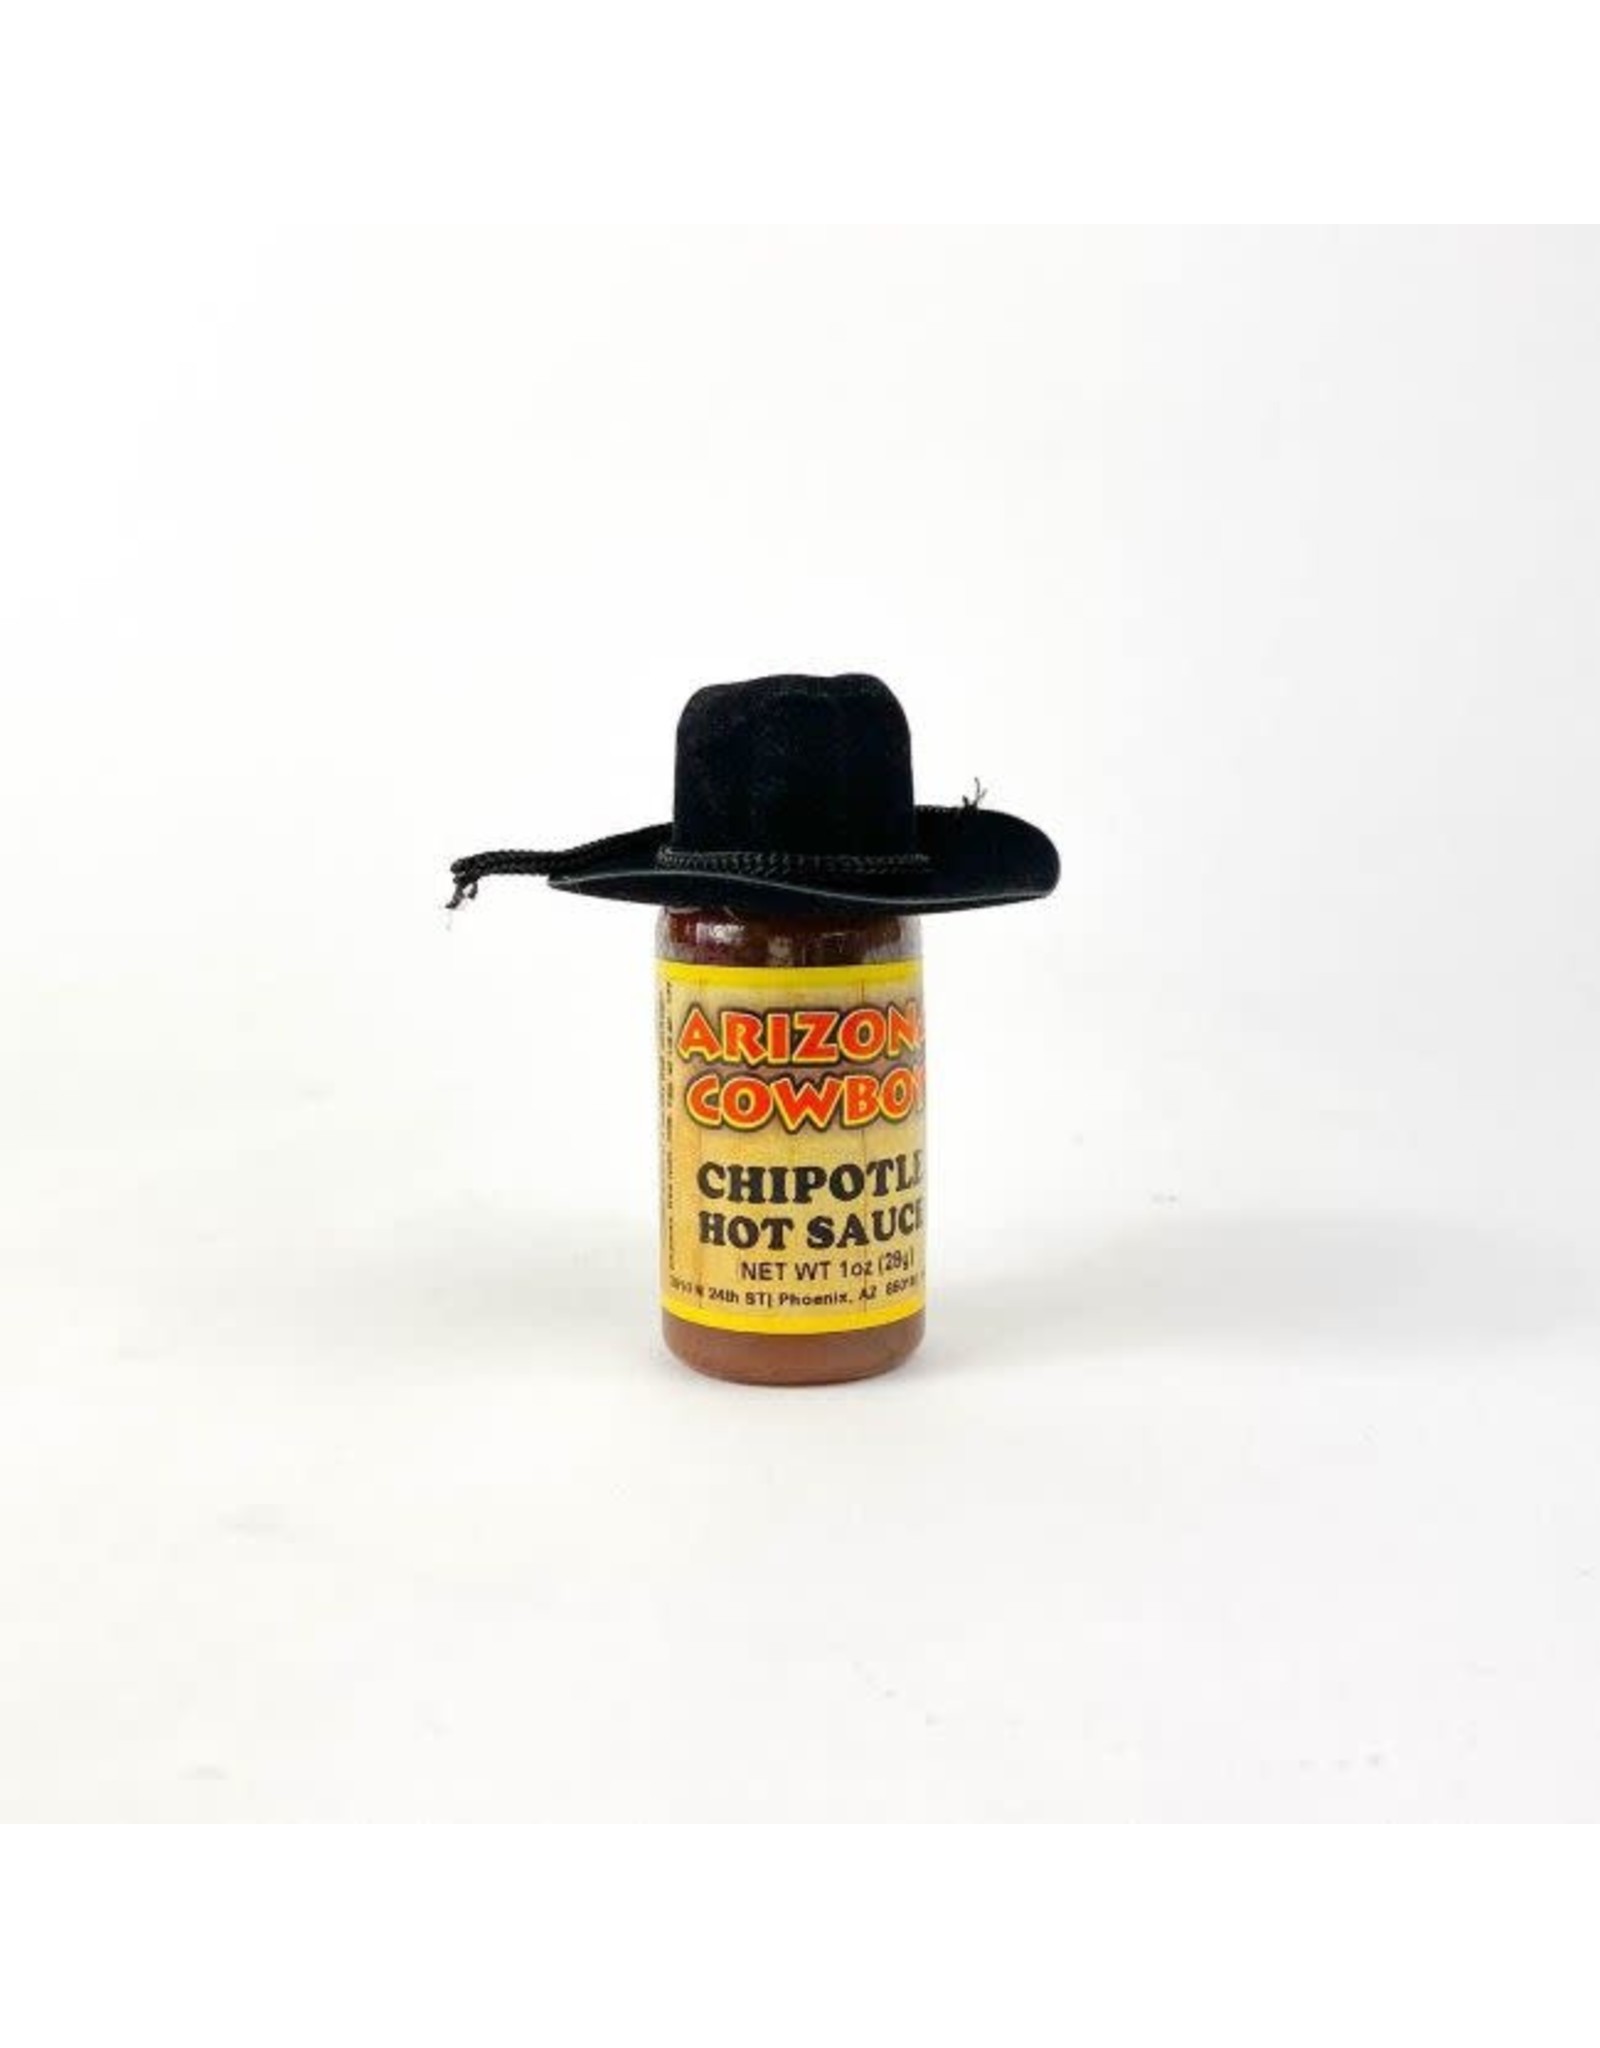 Arizona Cowboy Chipotle Hot Sauce 1oz